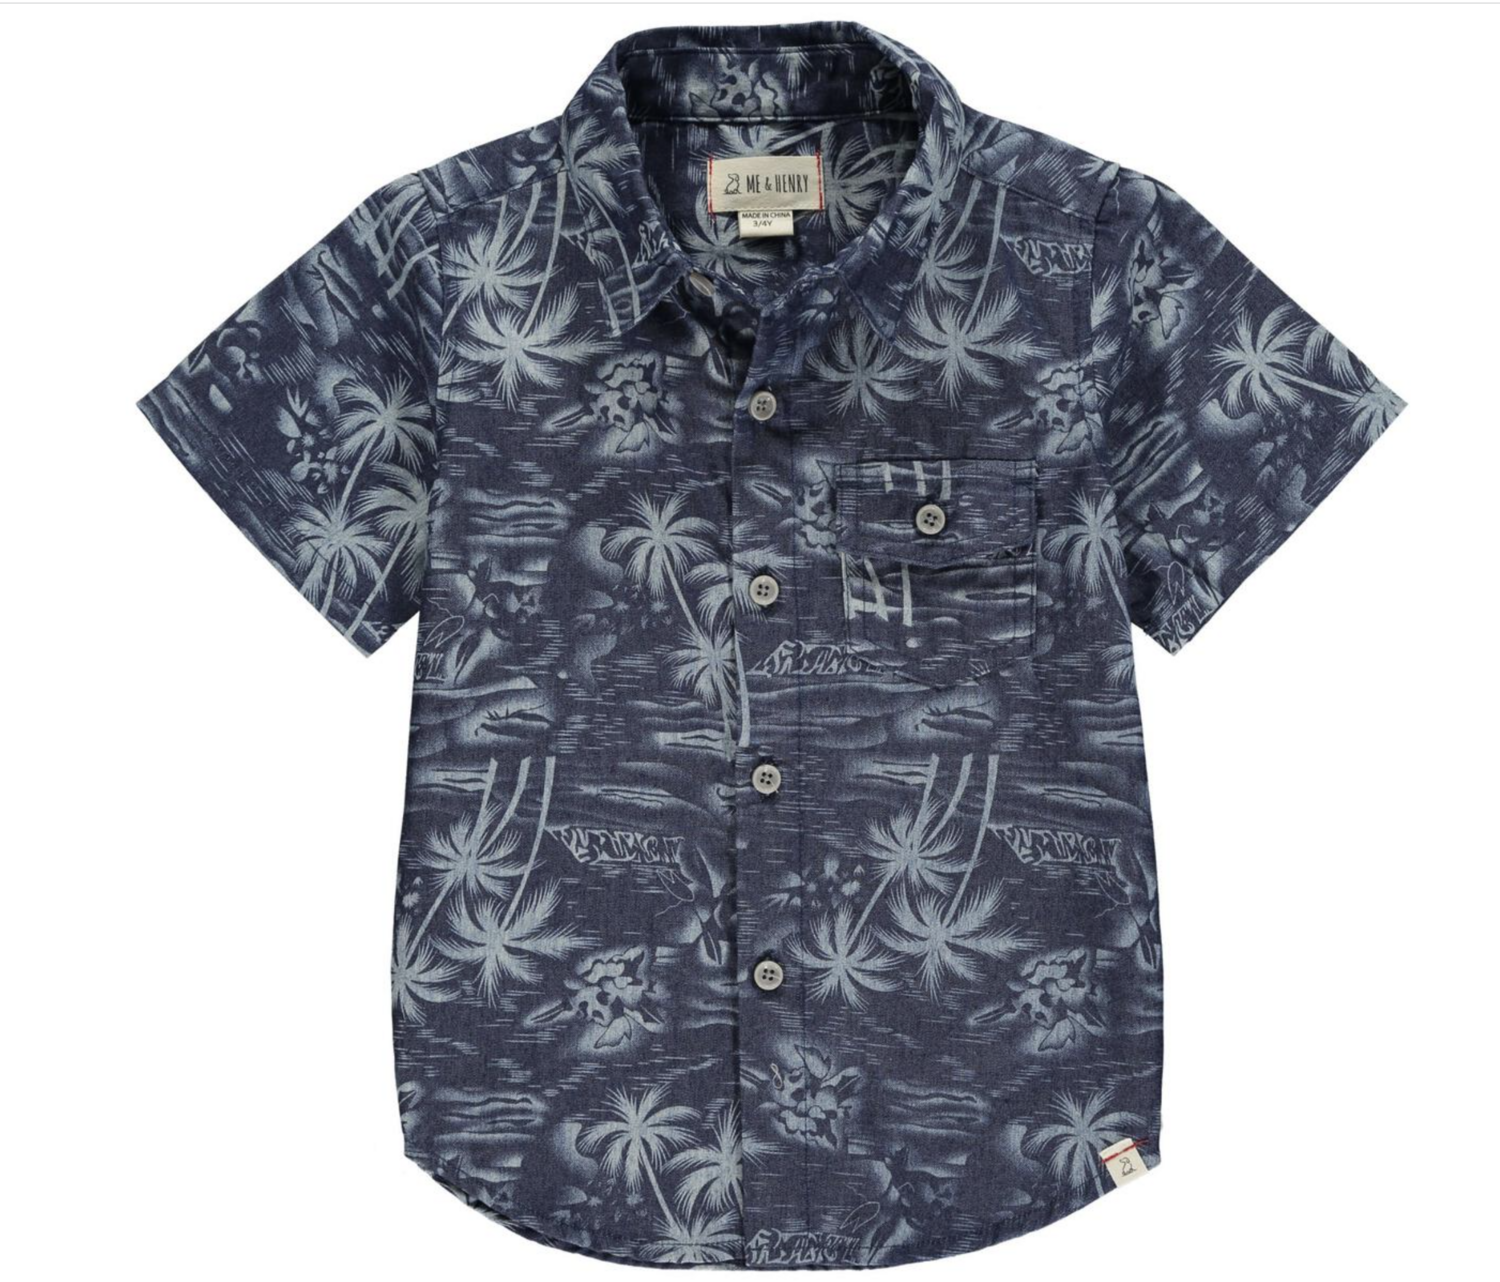 NEWPORT short sleeved shirt dark chambray Hawaii